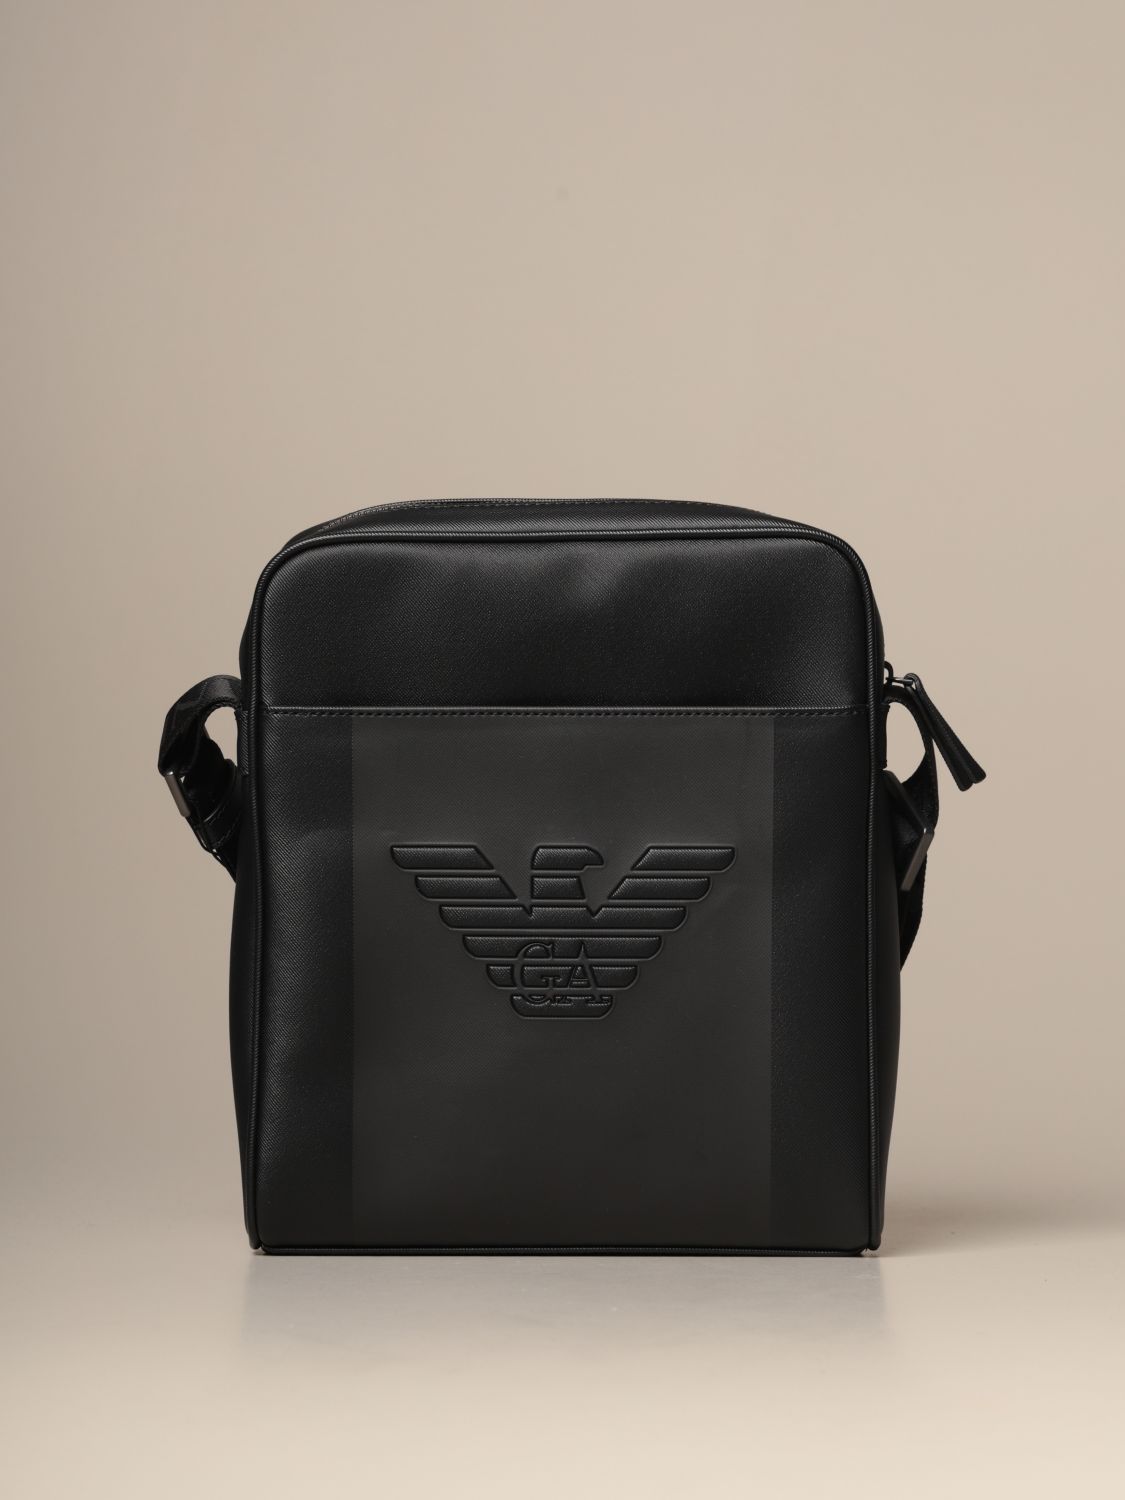 giorgio armani leather shoulder bag